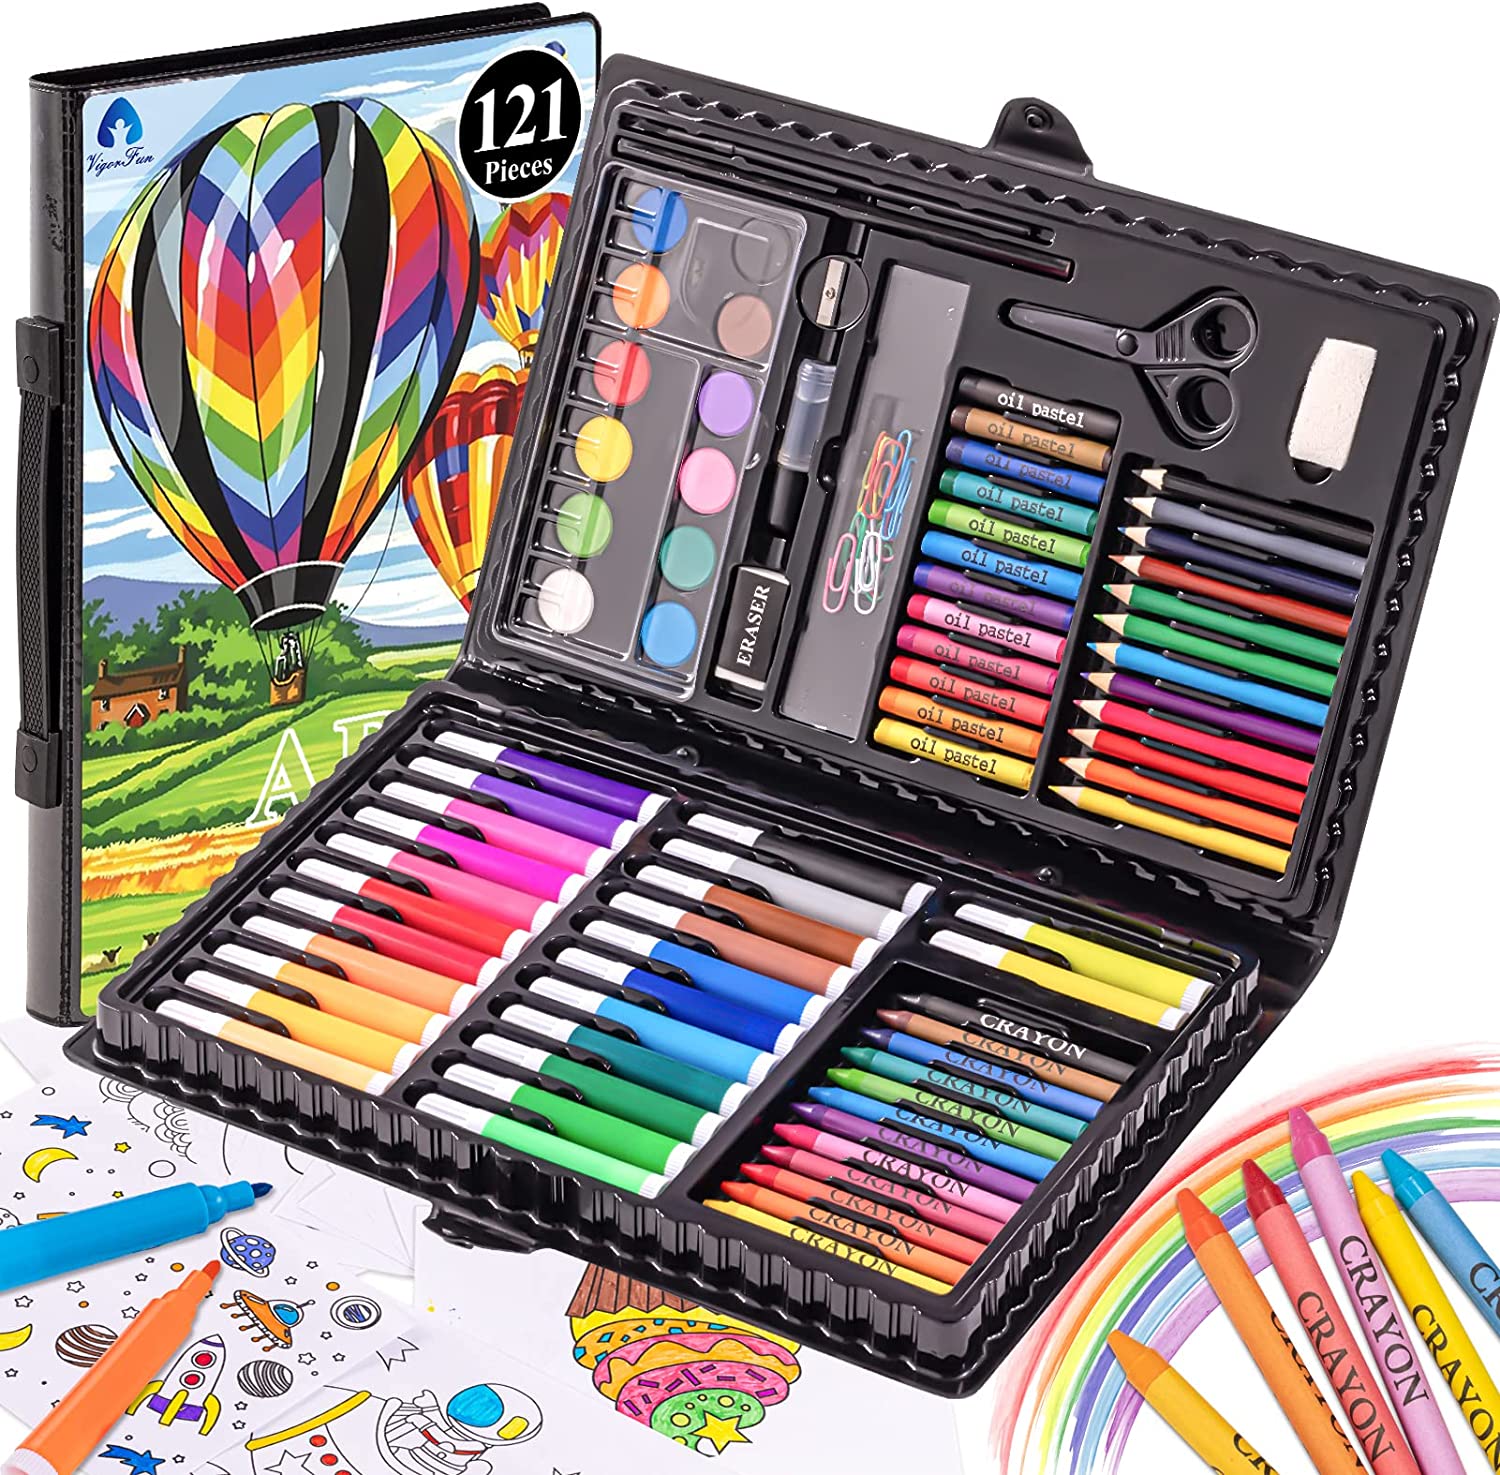 KINSPORY 150 Pcs Portable Inspiration & Creativity Coloring Art Set Painting & Drawing Supplies Kit, Markers, Crayons, Colour Pencils - Black